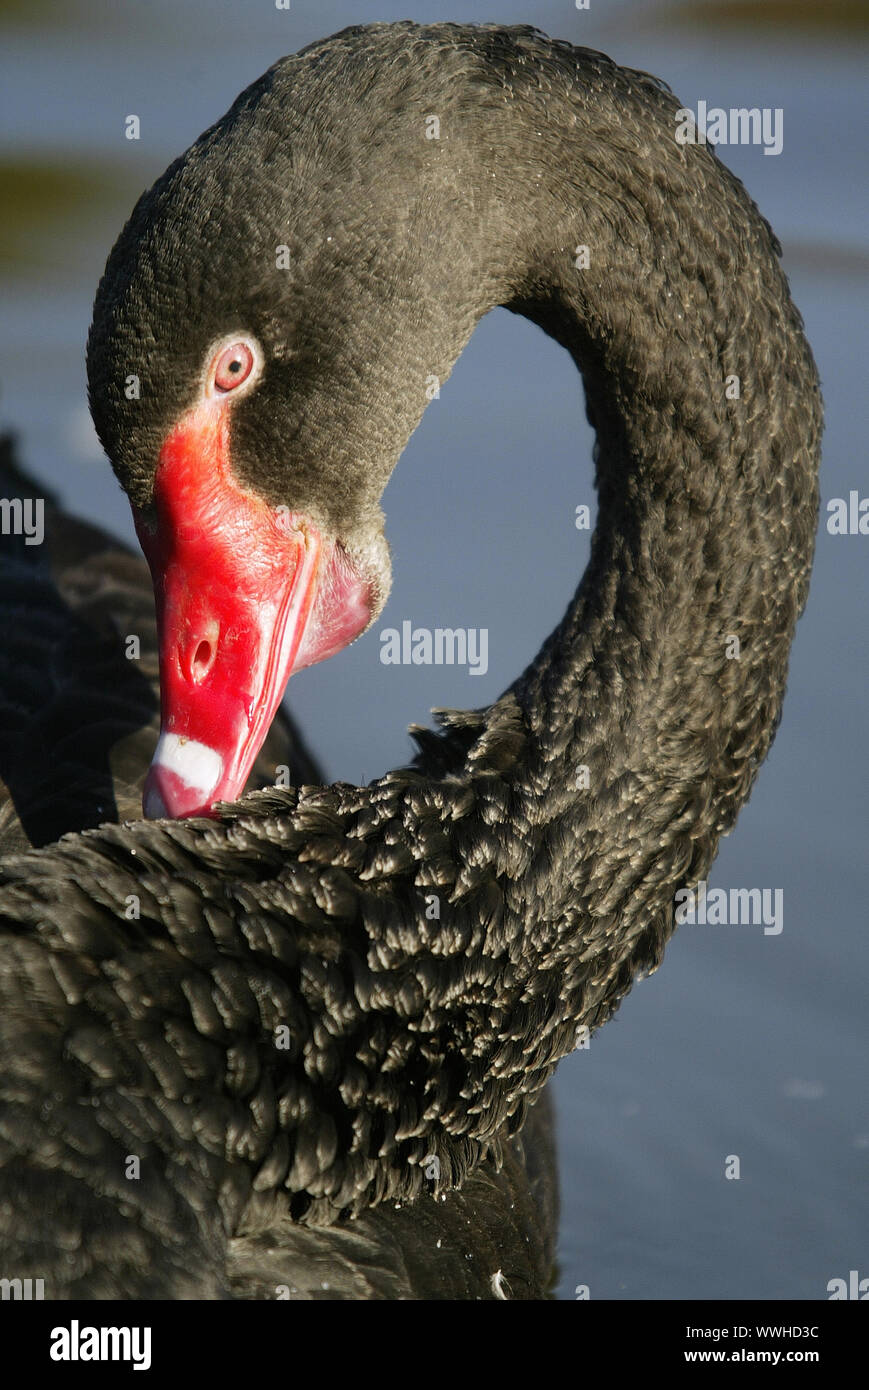 Black Swan, Black Swan, Funeral Swan, Cygnus atratus, Anas atrata, Black Swan Stock Photo